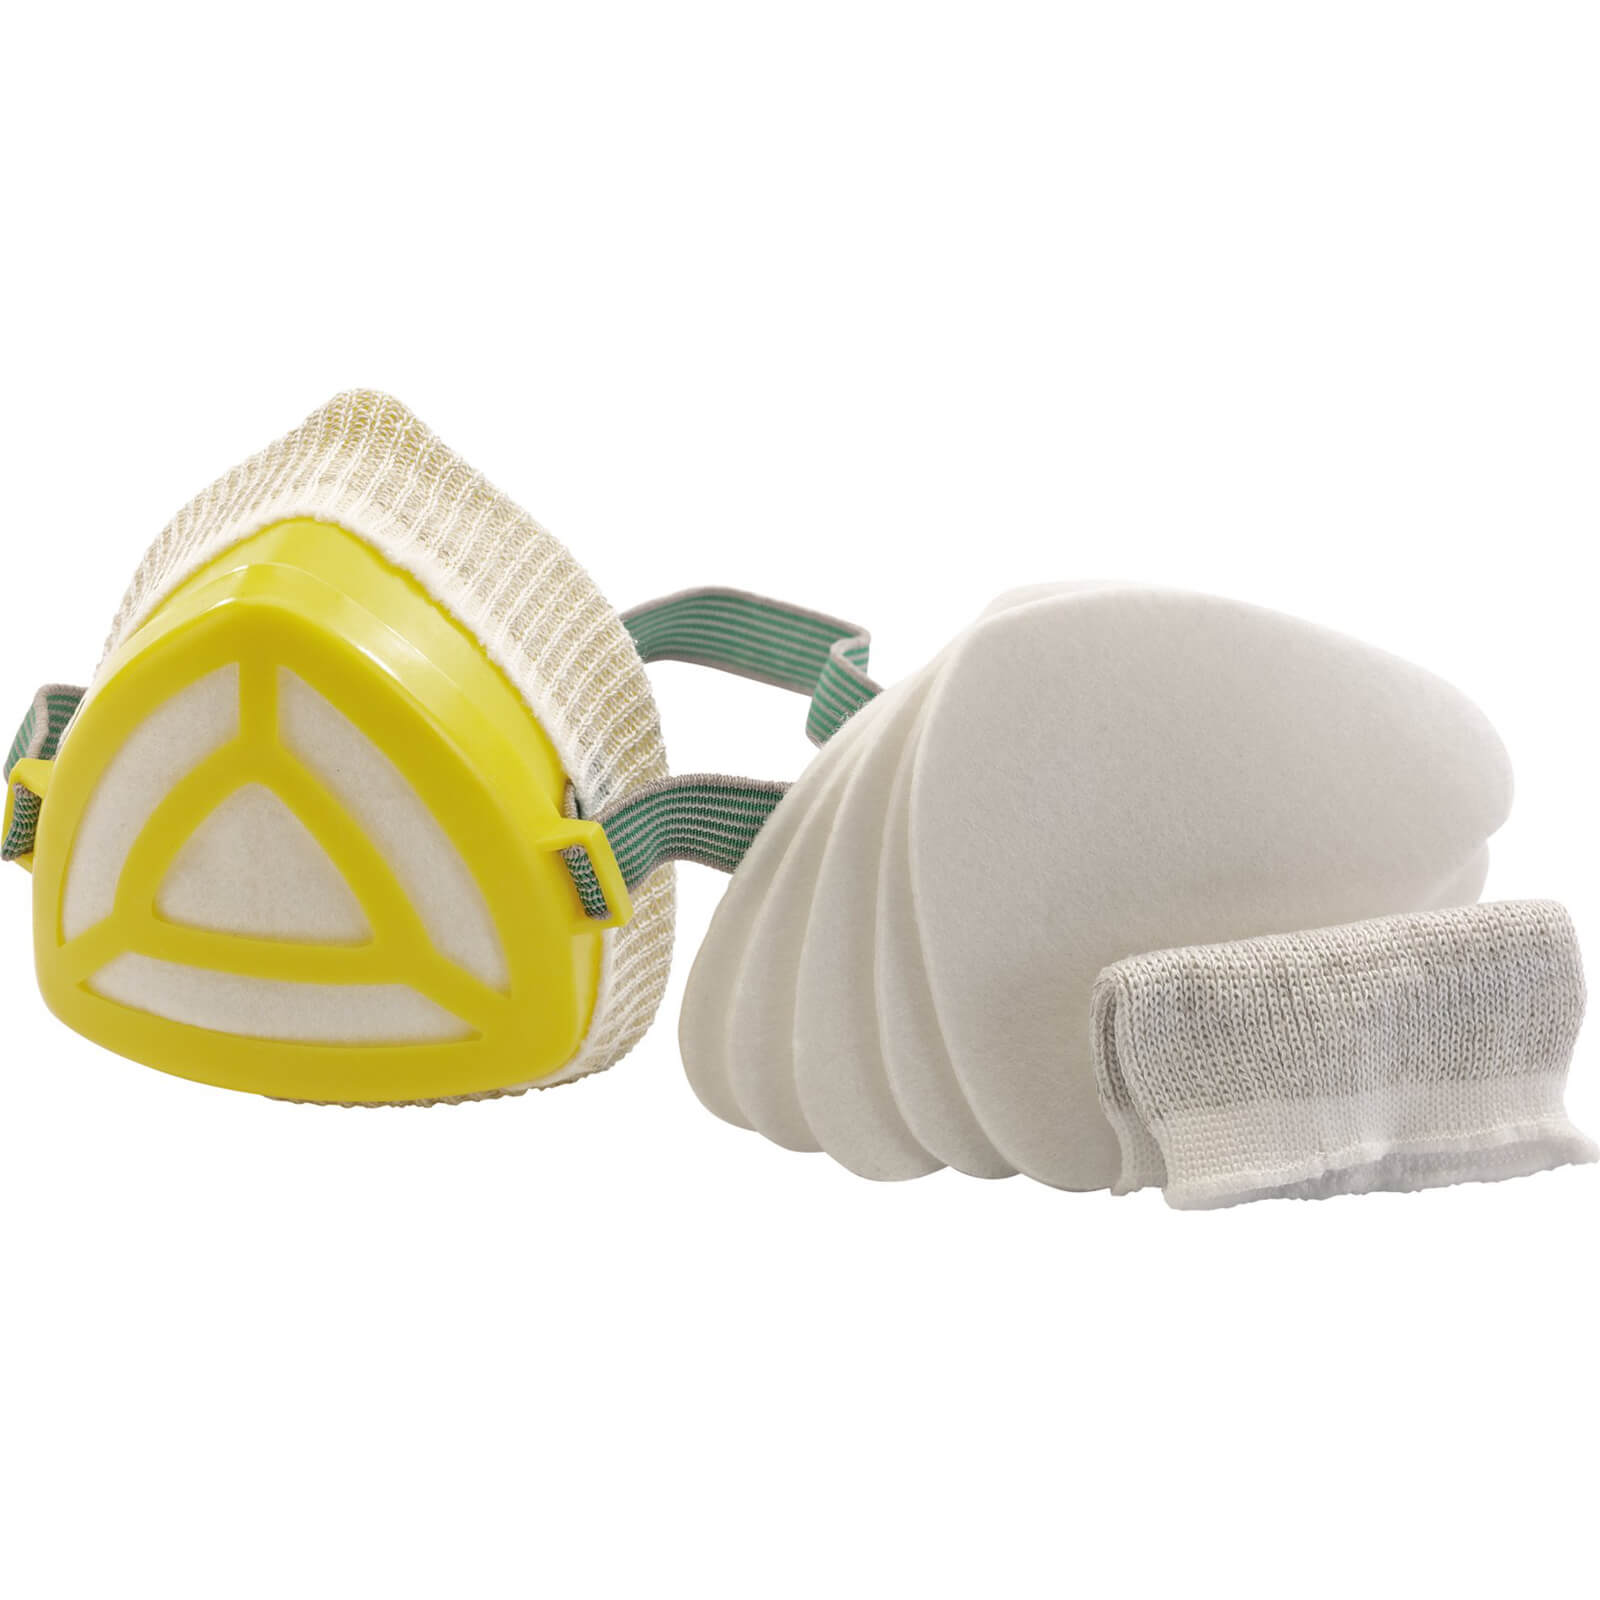 Image of Draper Comfort DIY Dust Mask + 5 Disposable Filters Pack of 1